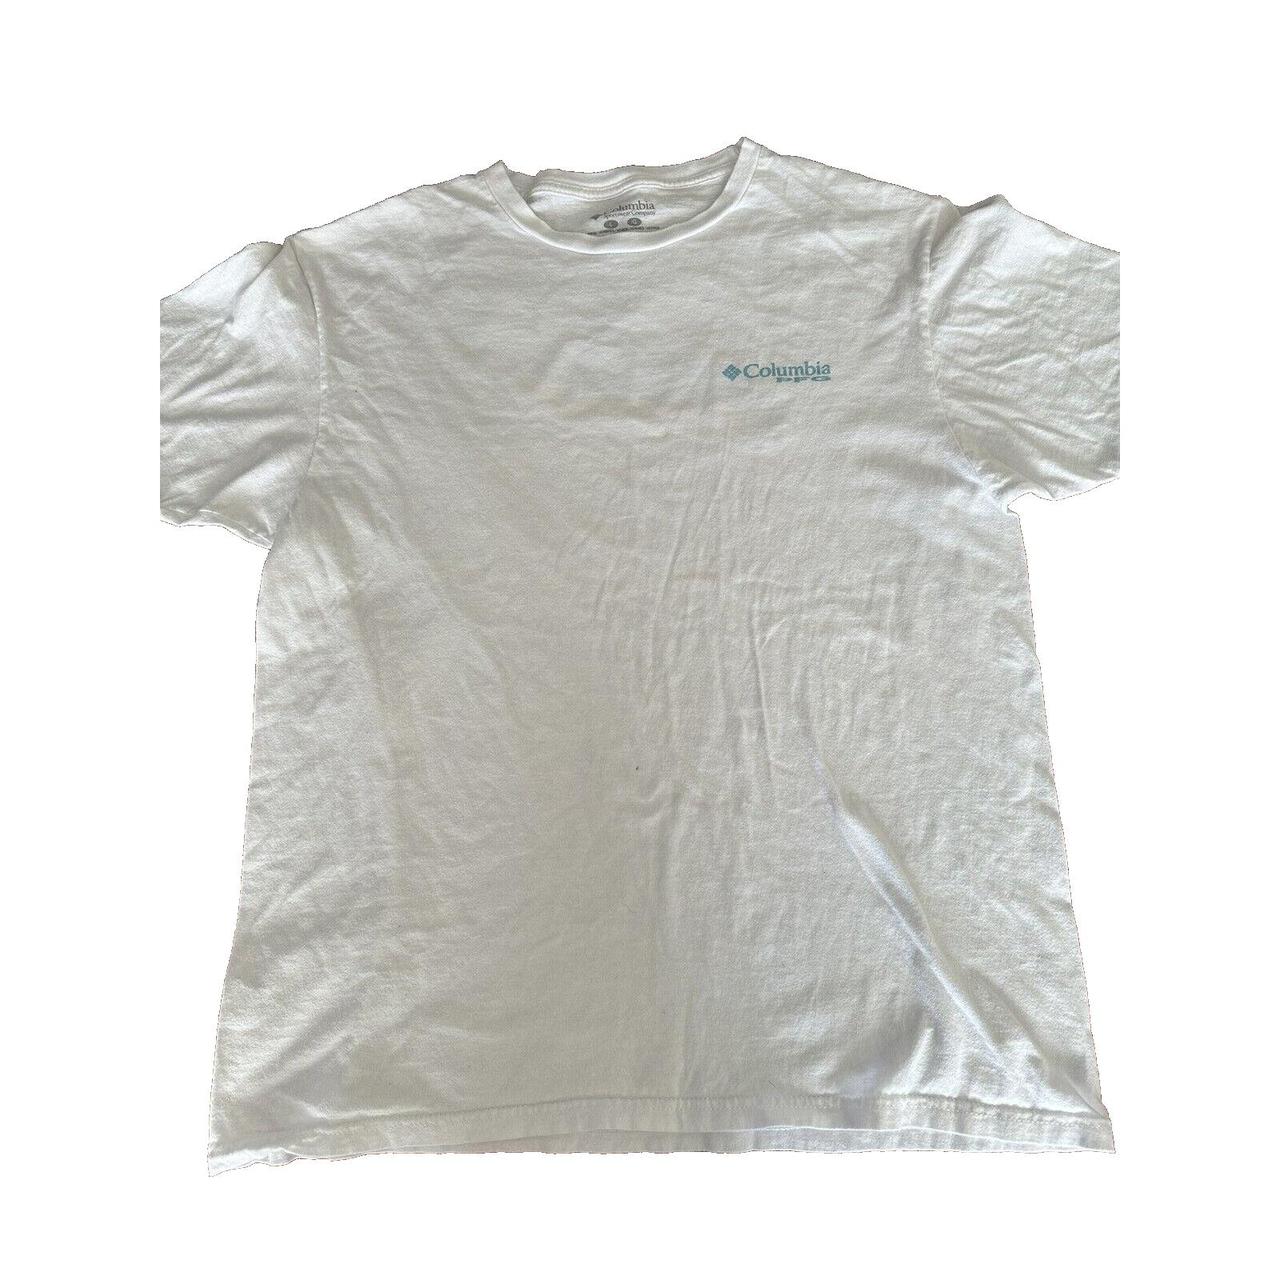 Columbia PFG Shirt Mens Large White Graphic Tee - Depop